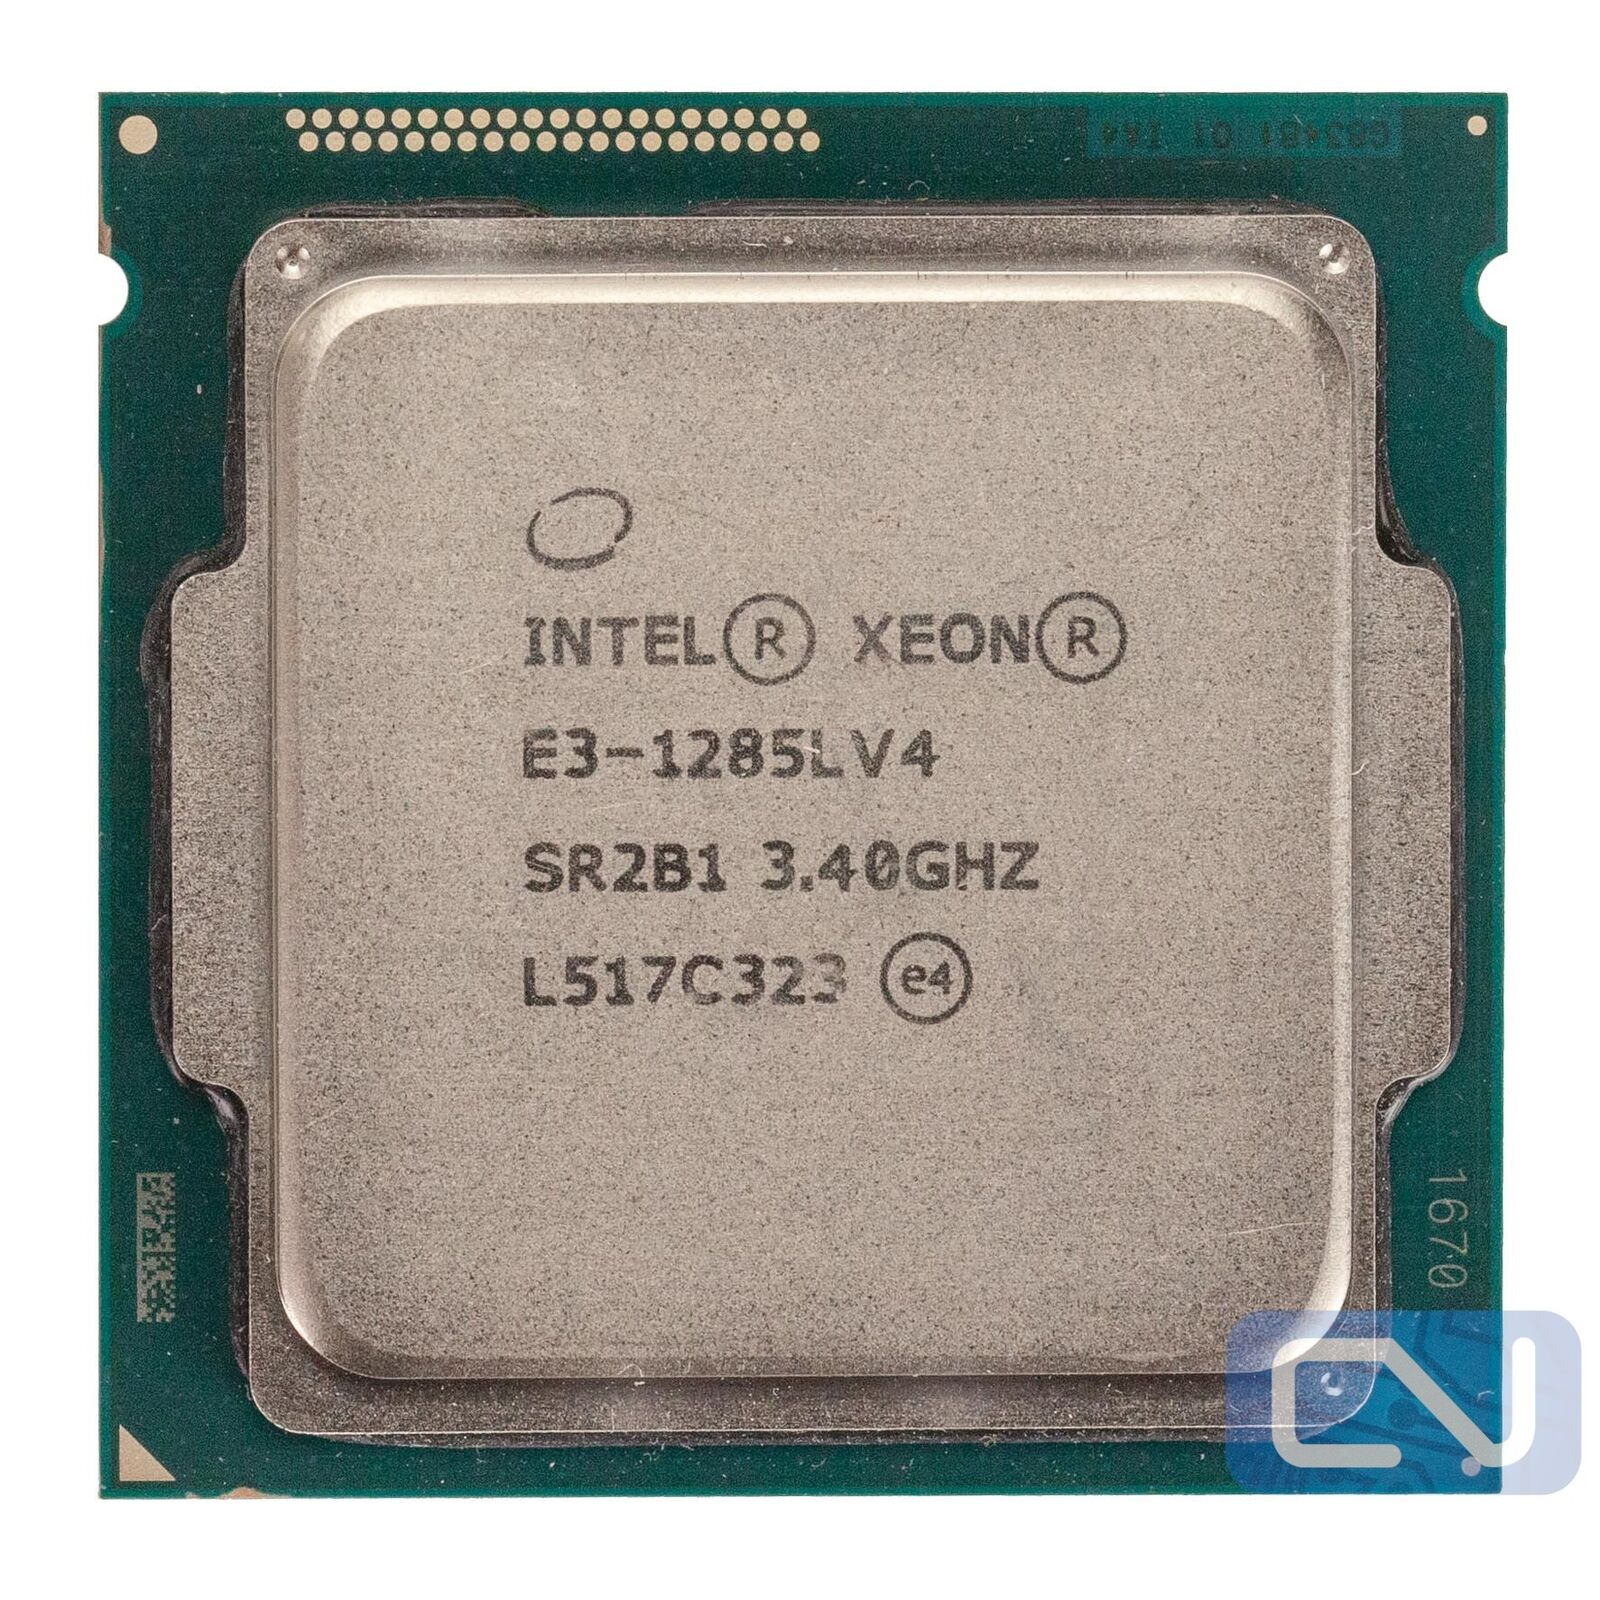 Intel Xeon E3-1285L v4 3.4GHz 6MB 5GT/s SR2B1 LGA1150 B Grade CPU TDP 65 W